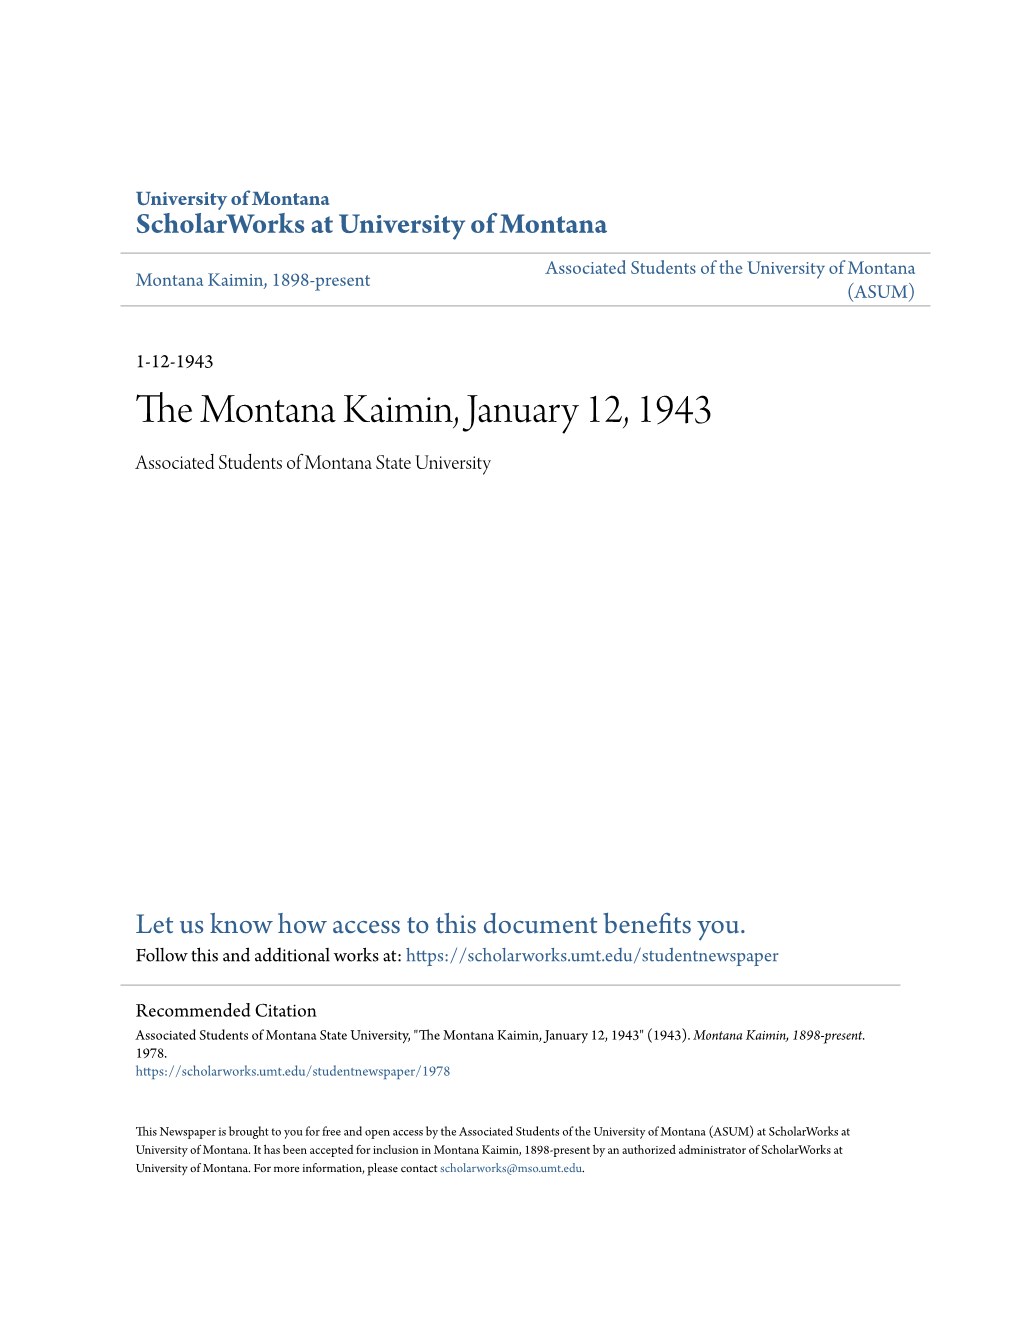 The Montana Kaimin, January 12, 1943